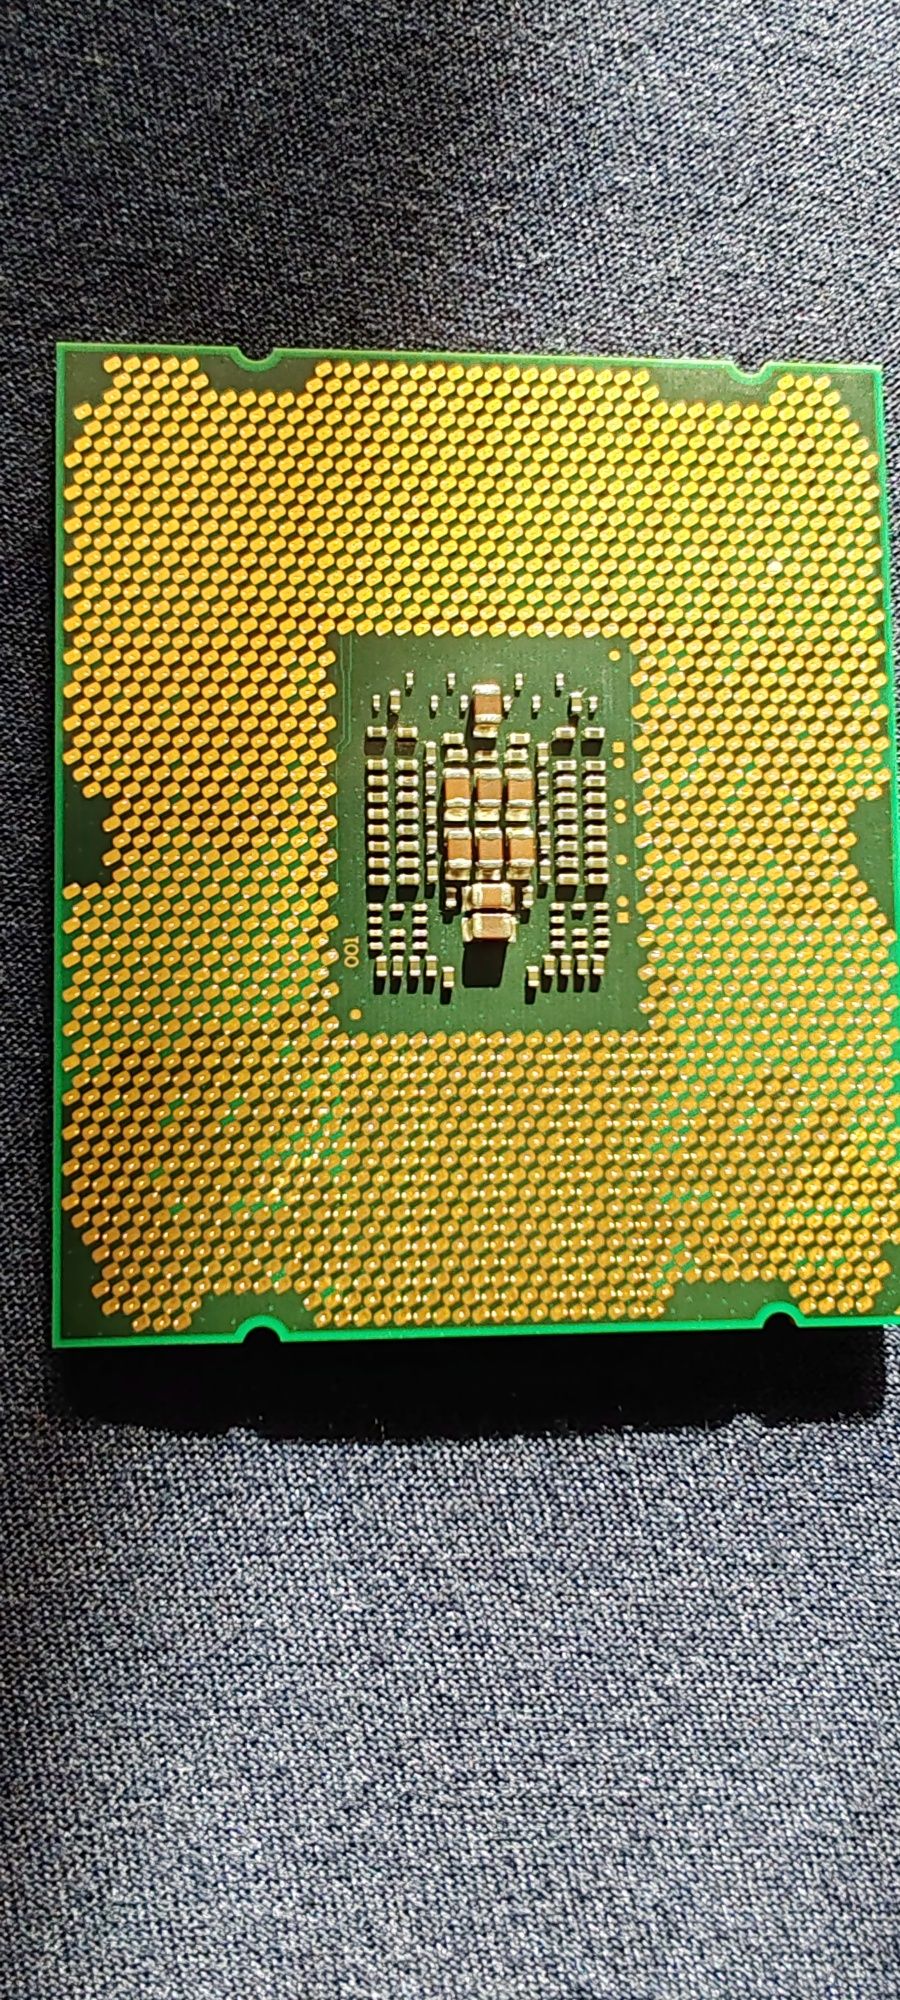 Procesor Xeon quad Core 3.6 ghz